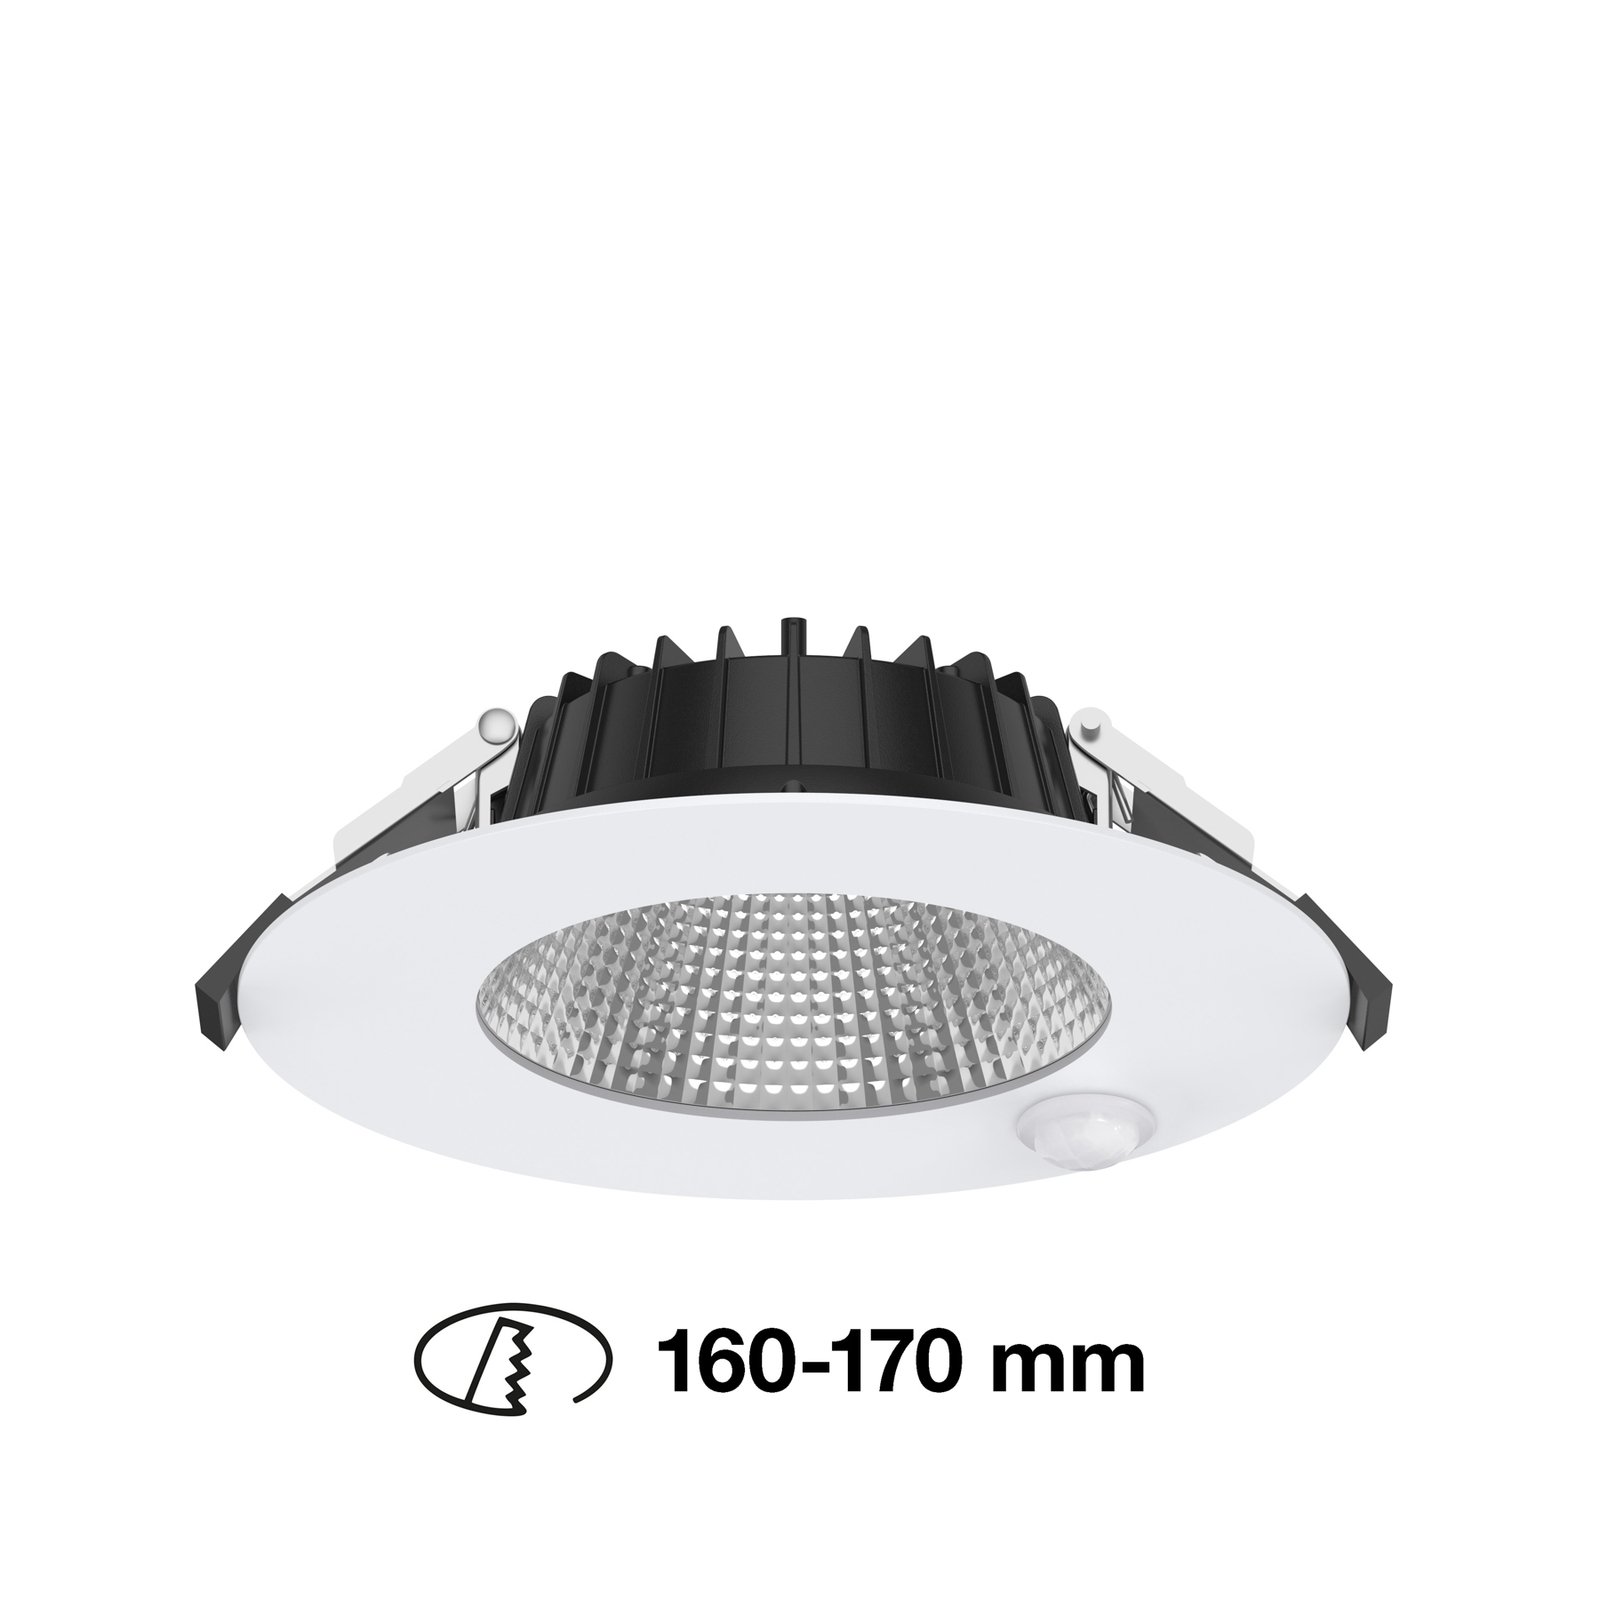 SLC Shift downlight LED Ø 18cm alb cu senzor